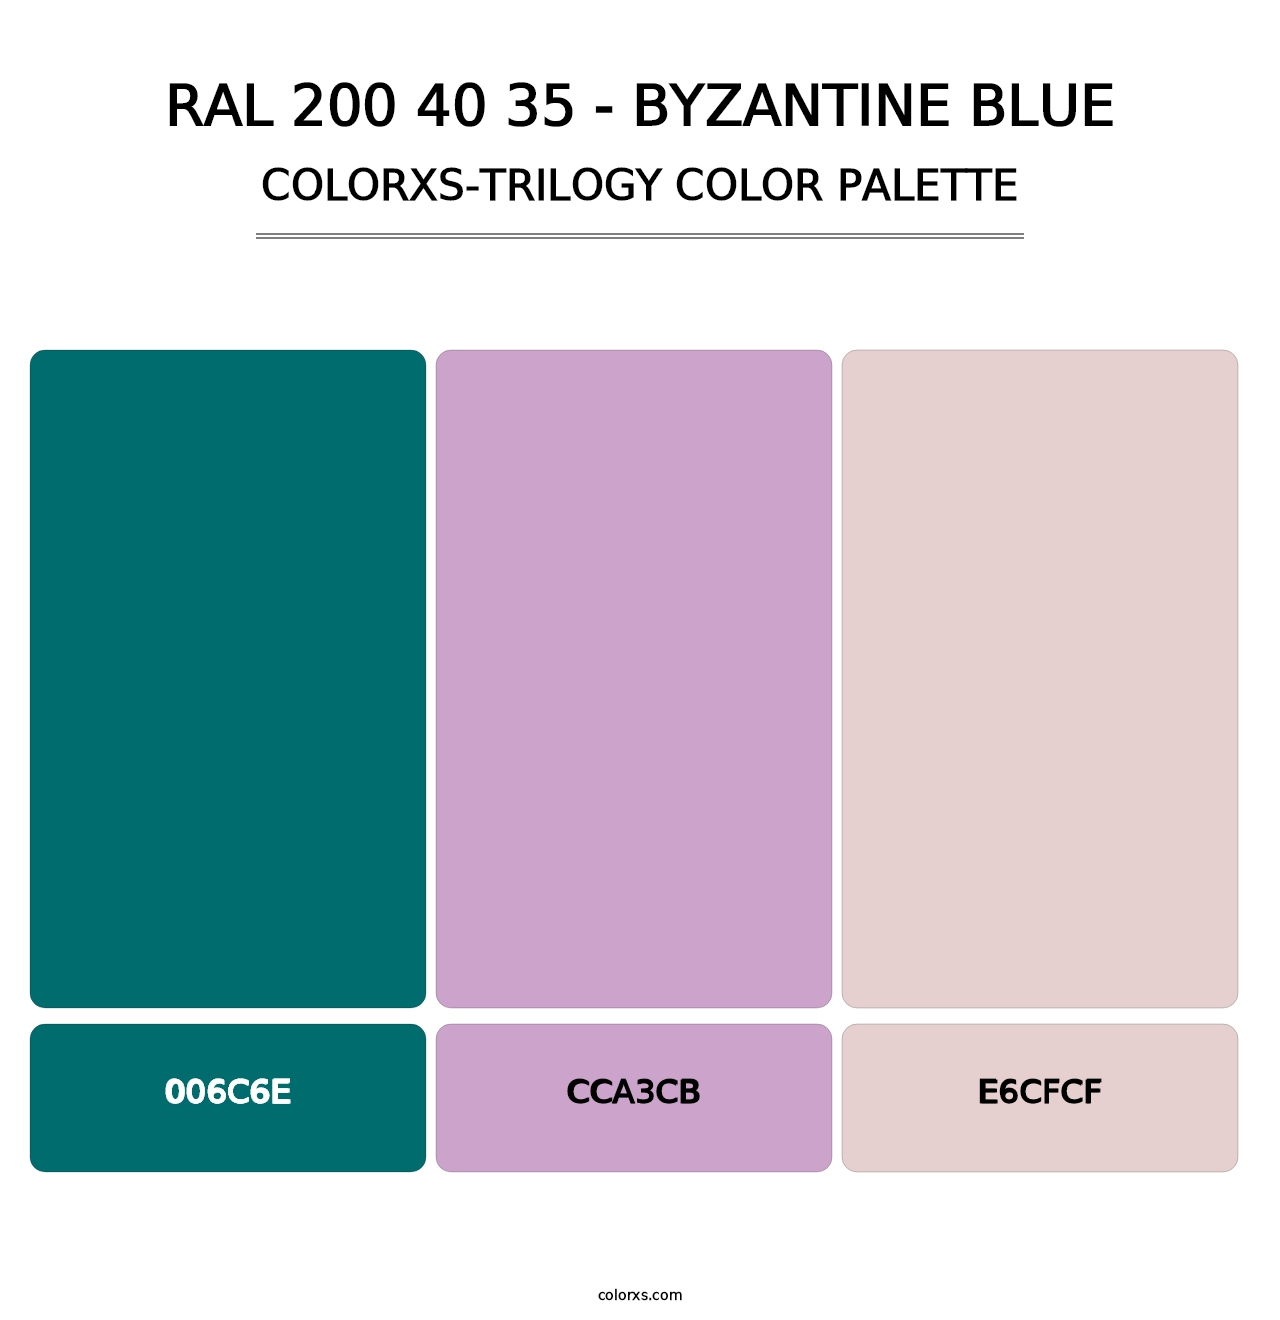 RAL 200 40 35 - Byzantine Blue - Colorxs Trilogy Palette